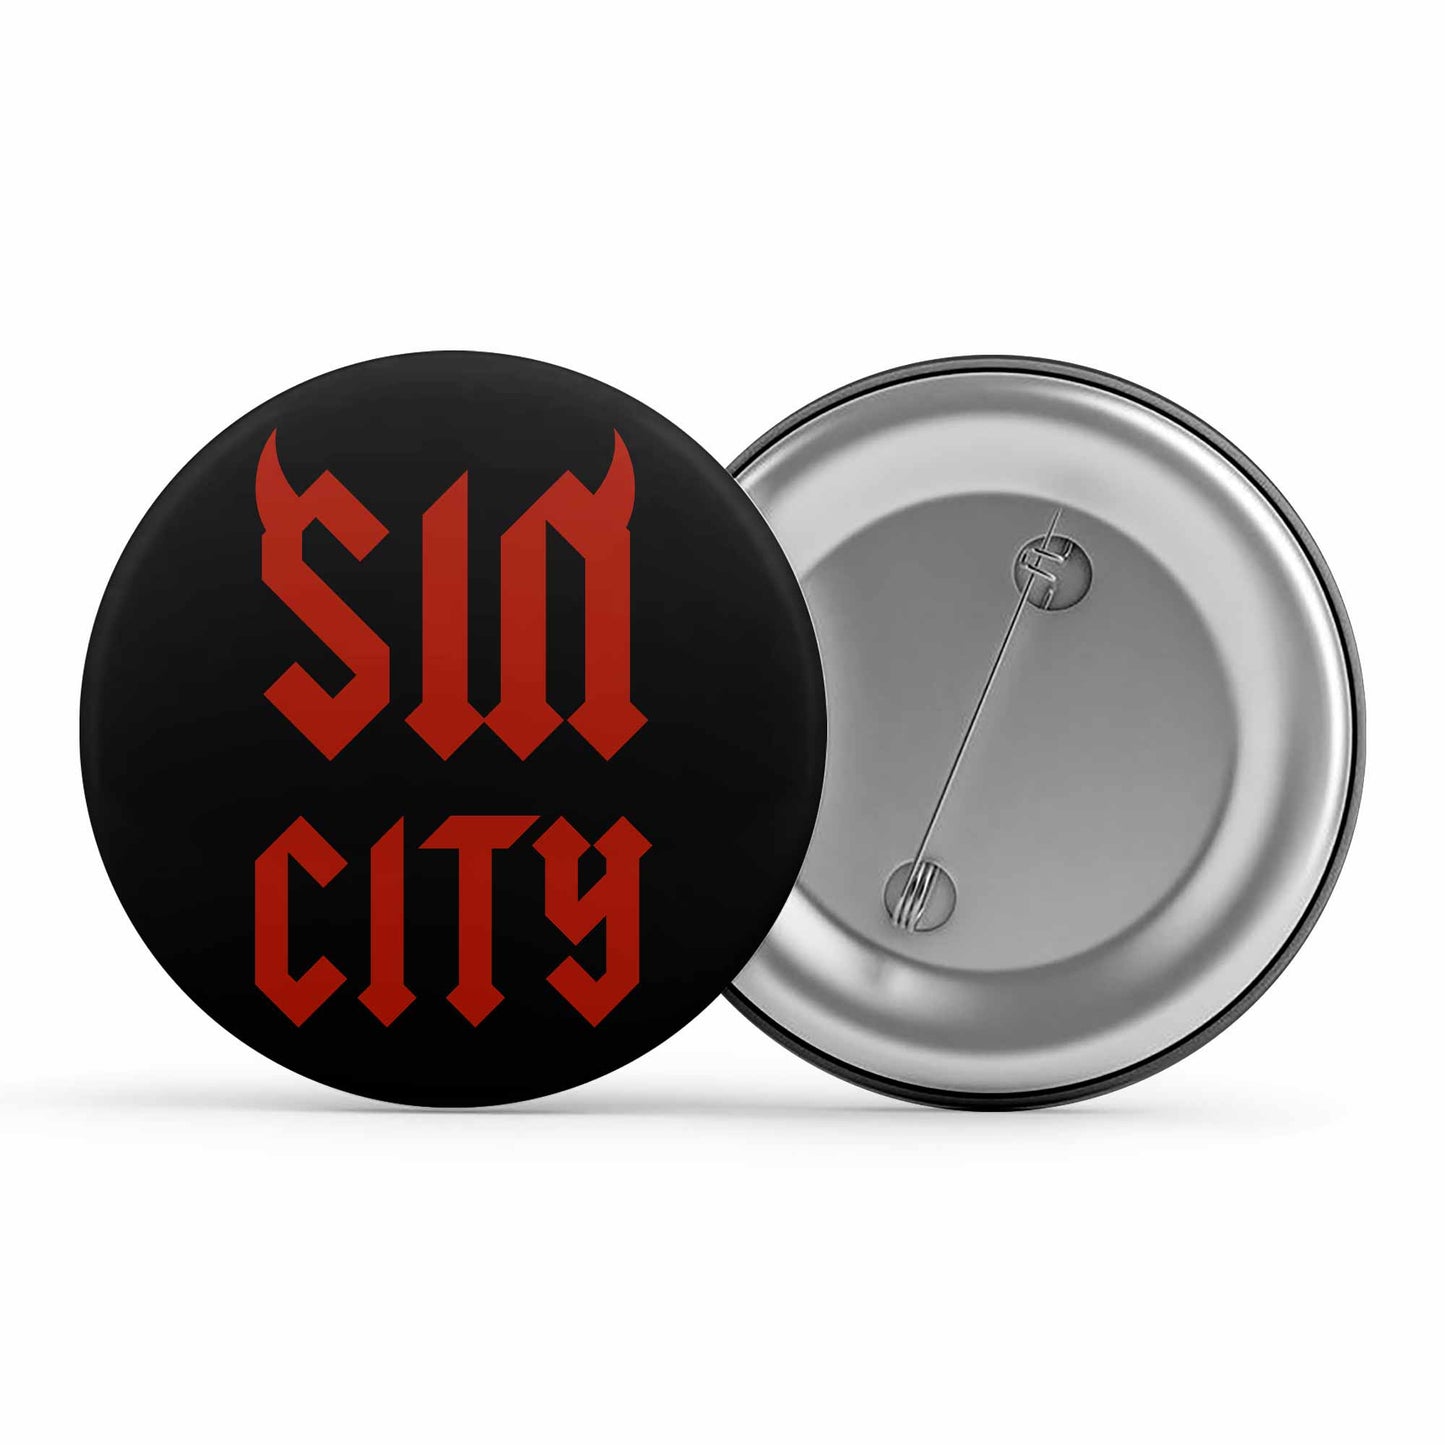 ac/dc sin city badge pin button music band buy online india the banyan tee tbt men women girls boys unisex